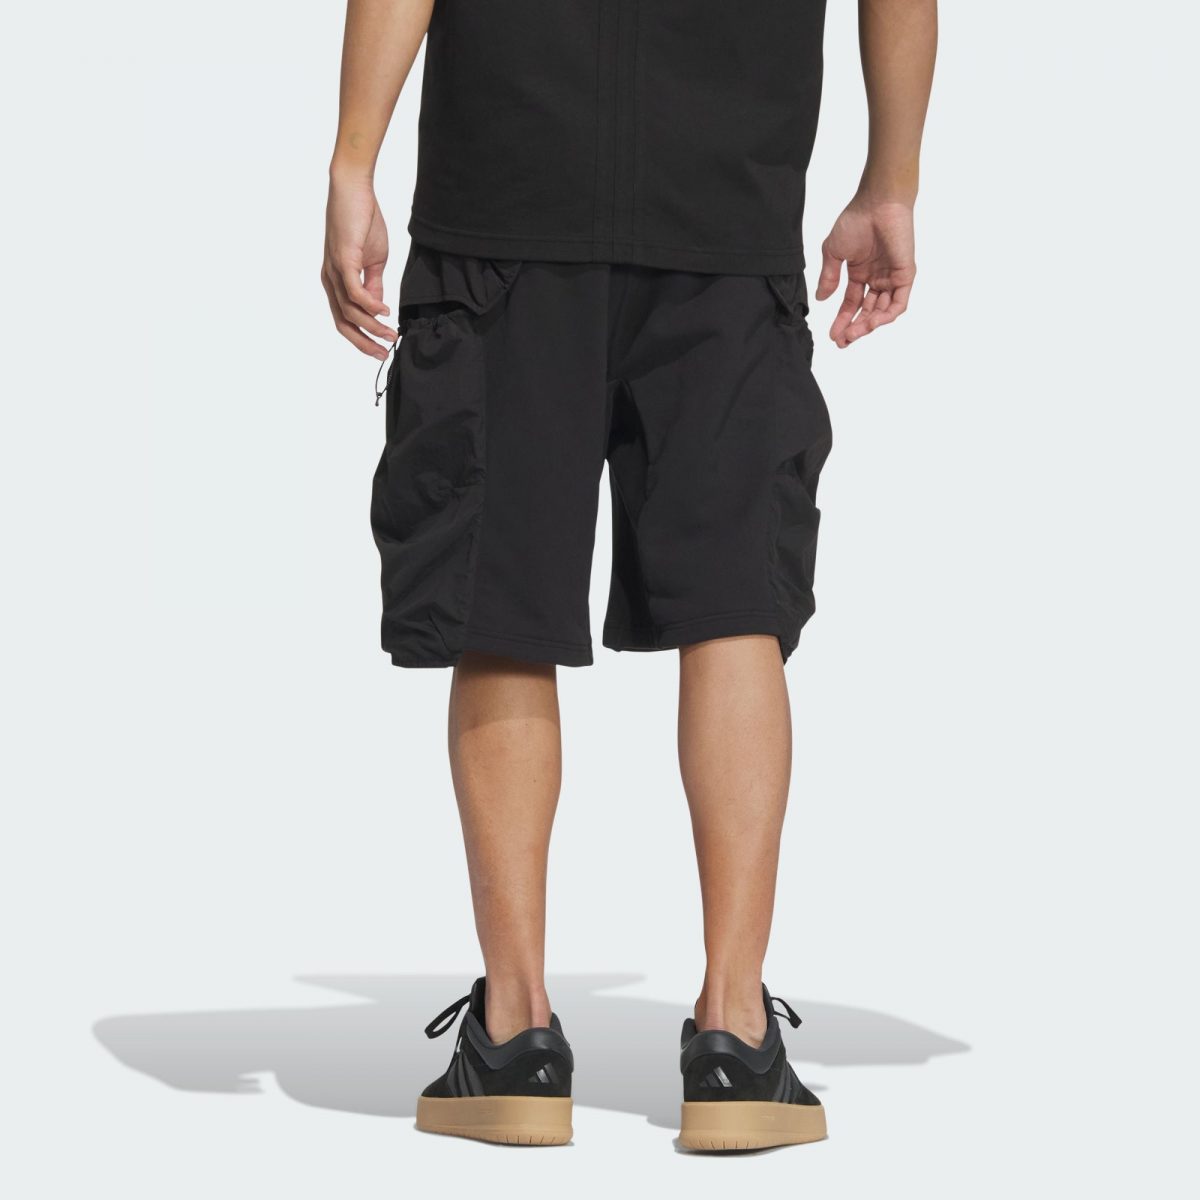 Мужские шорты adidas FUTURE STYLE WOVEN MIX SHORTS черные фотография